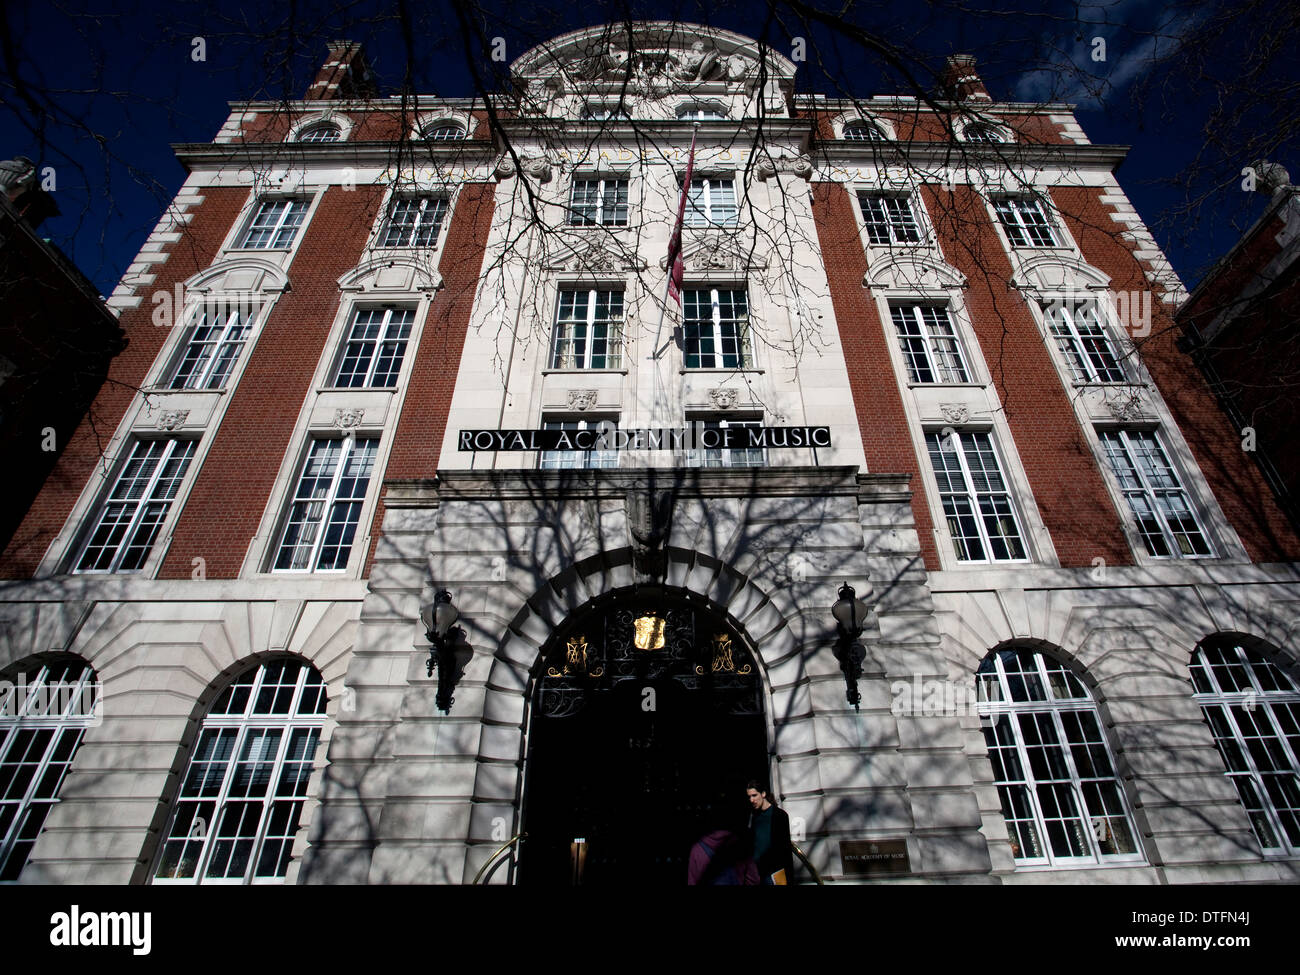 Royal Academy of Music, Marylebone Road, London Stock Photo